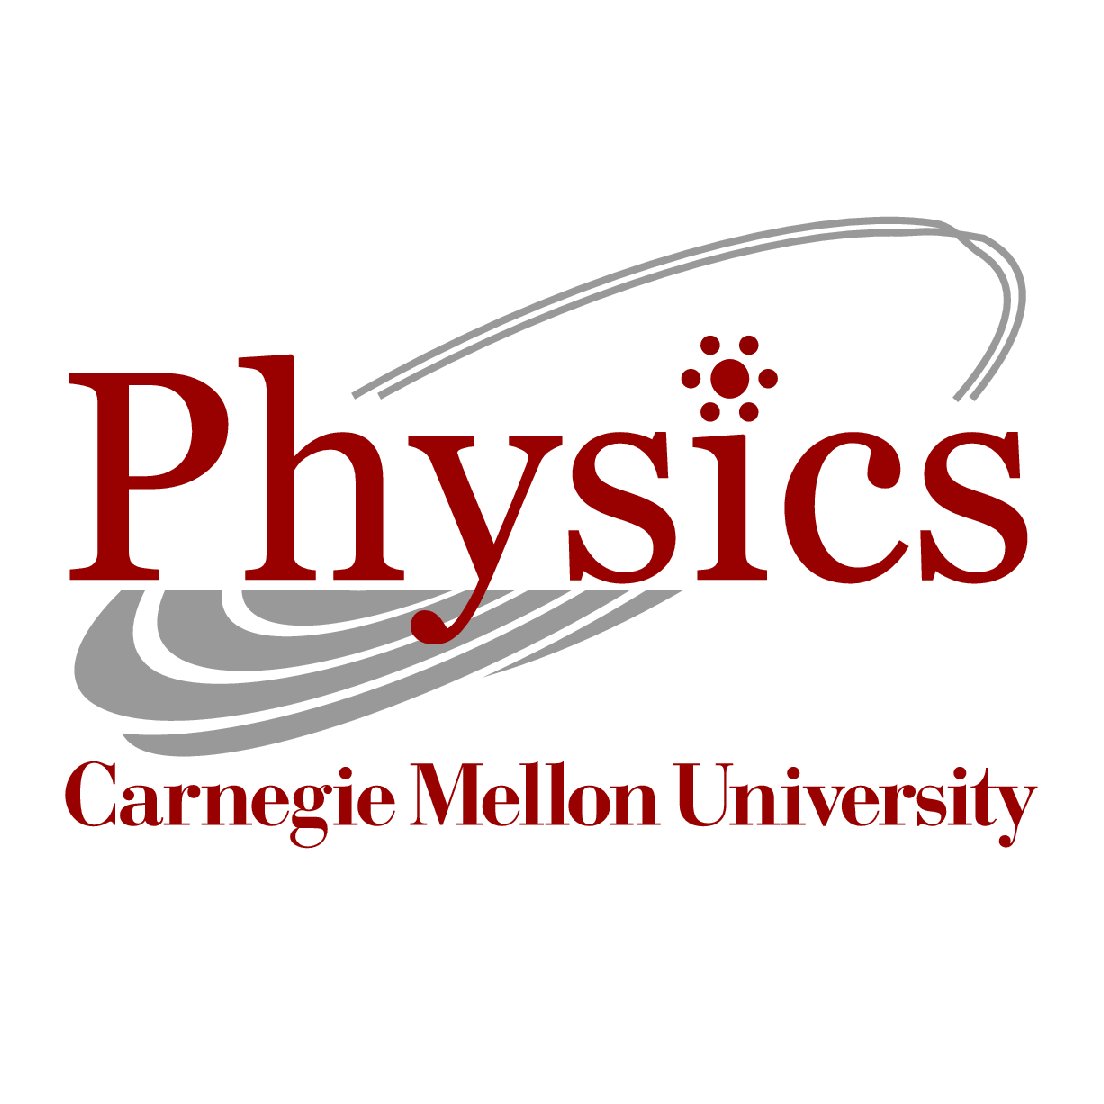 Department of Physics at Carnegie Mellon University.